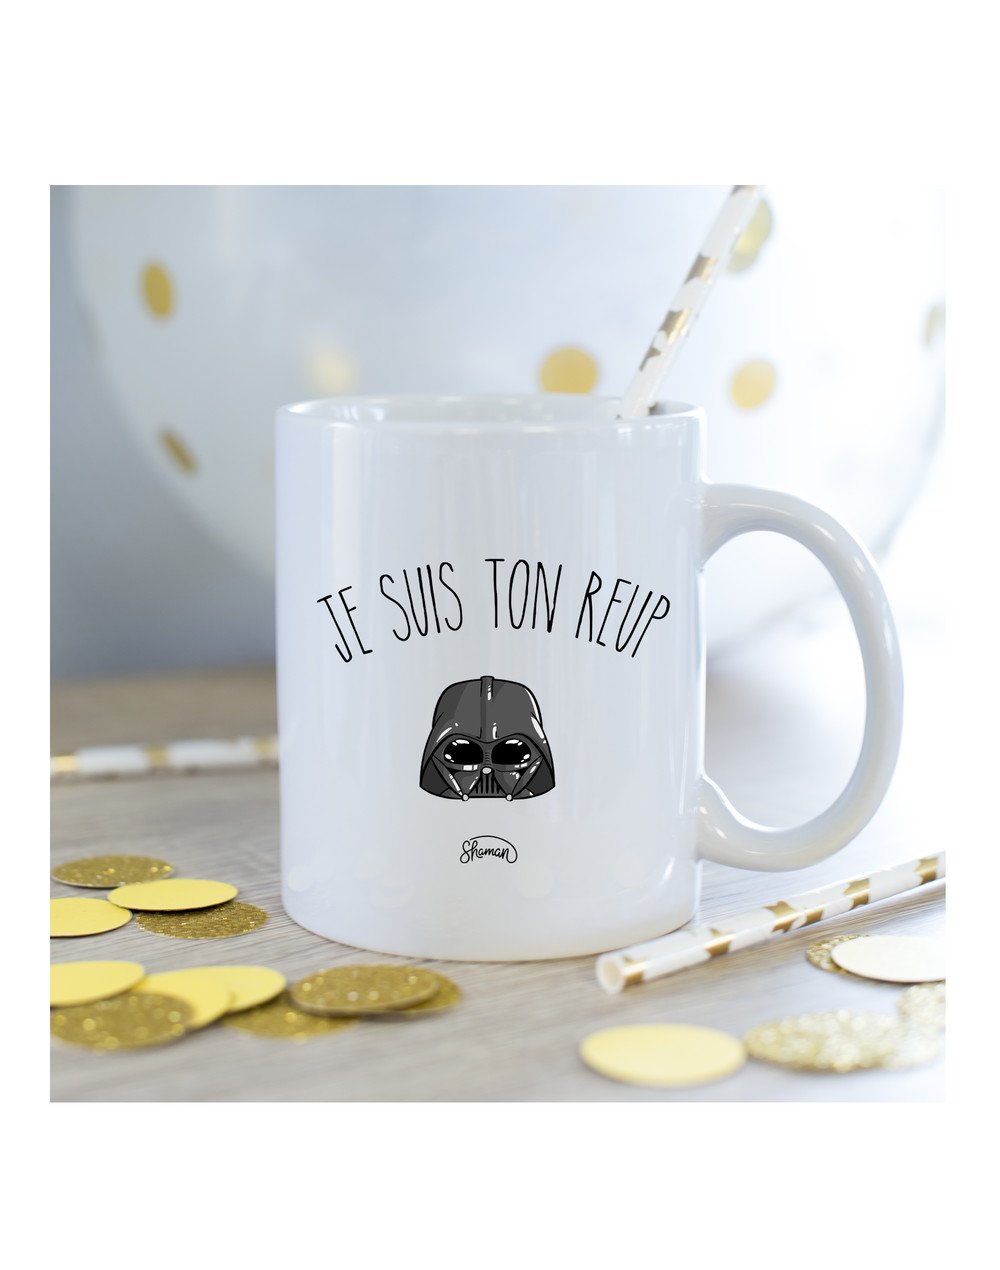 Mug Ton reup